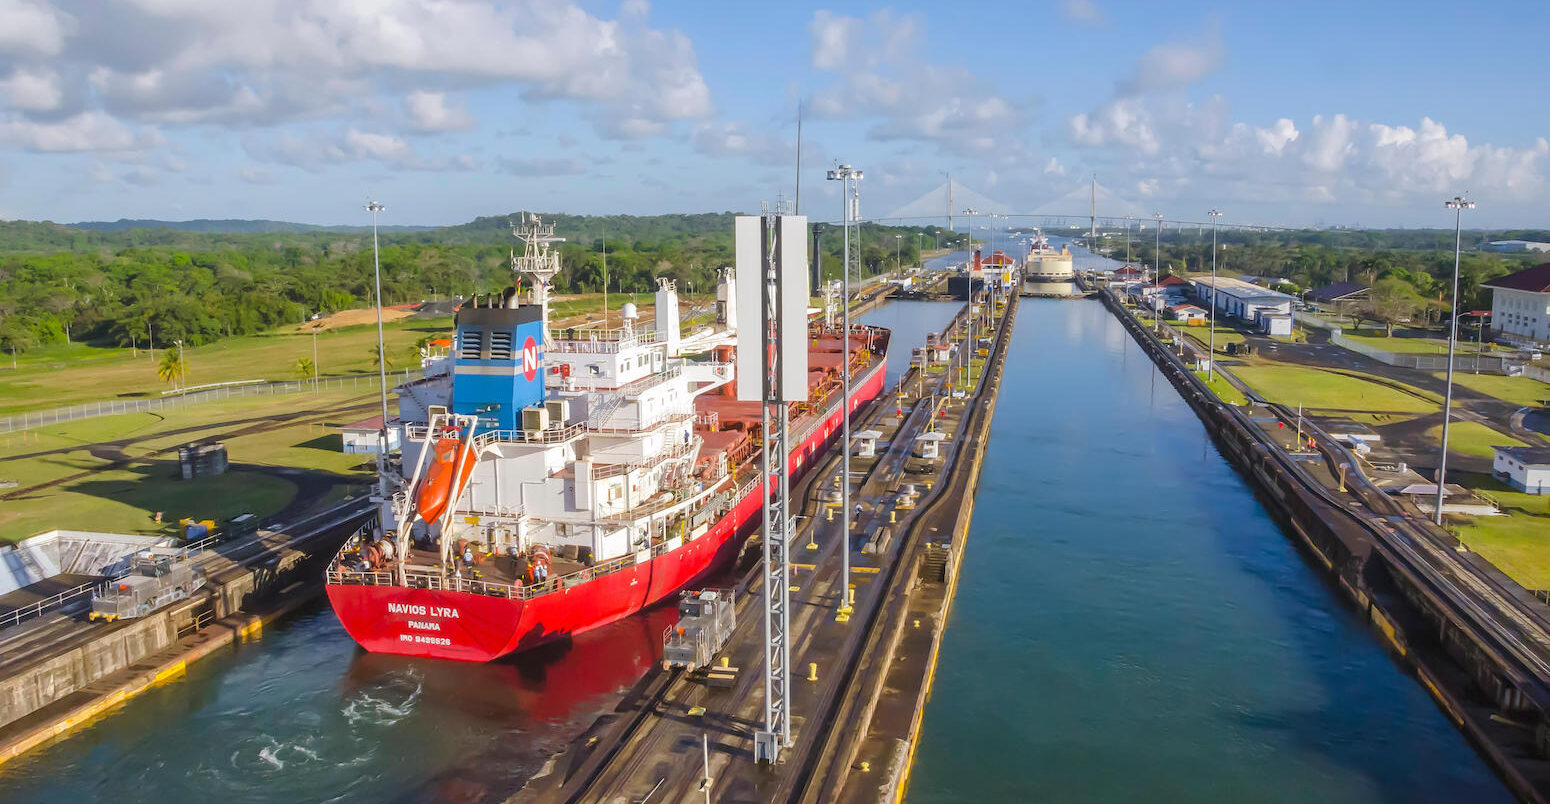 Red cargo ship transits through Gatun Locks, Panama Canal.